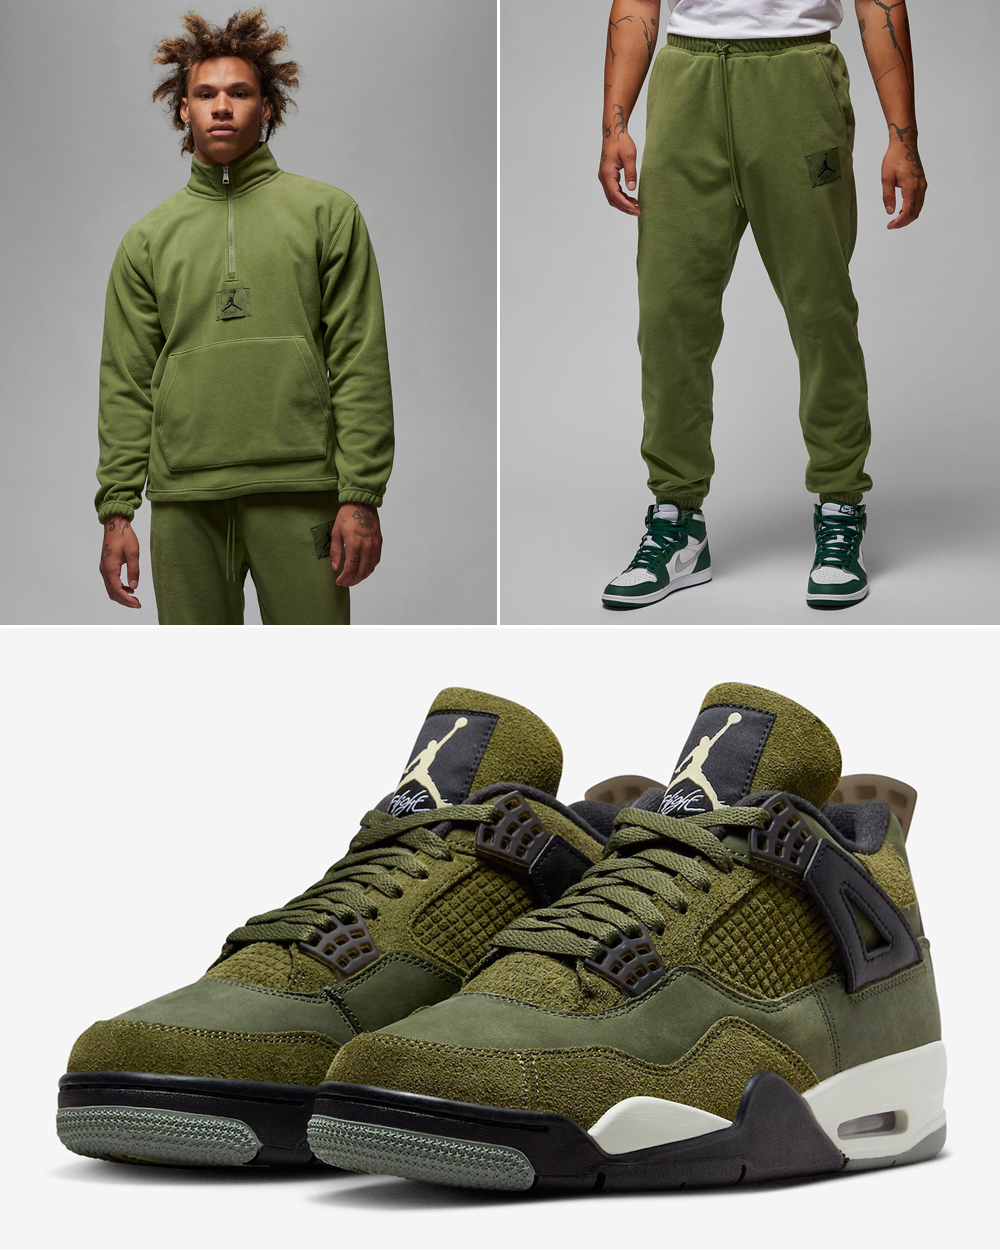 Air-Jordan-4-Craft-Olive-Top-Pants-Outfit